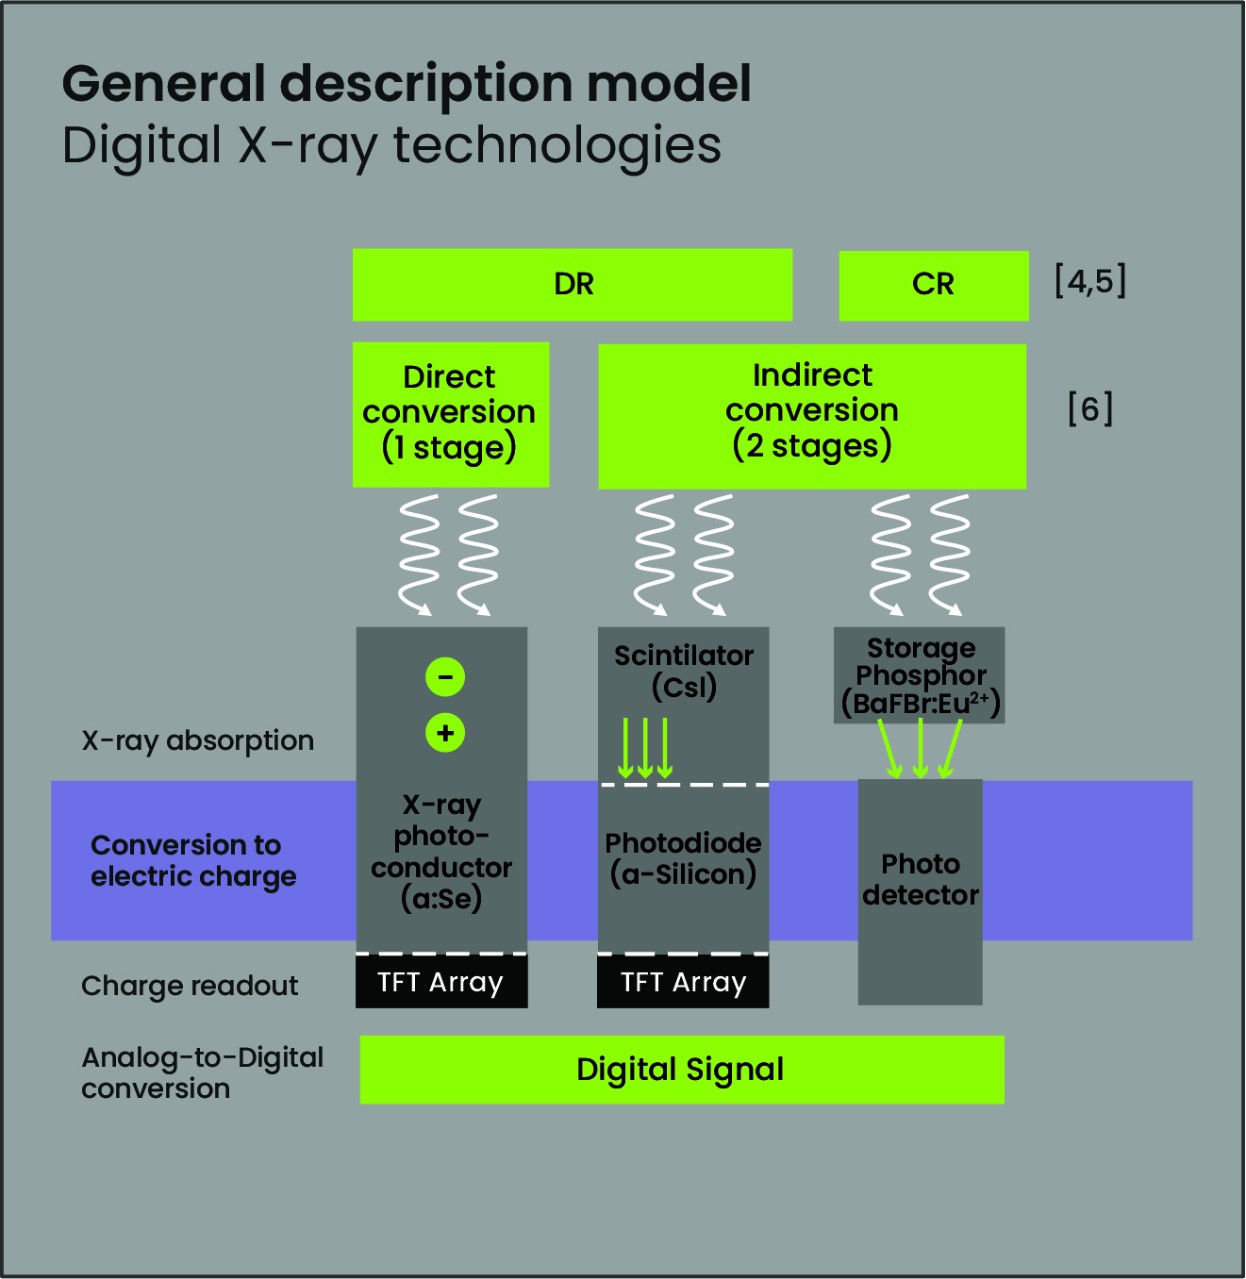 Figure 1 General description model for digital X-ray technologies